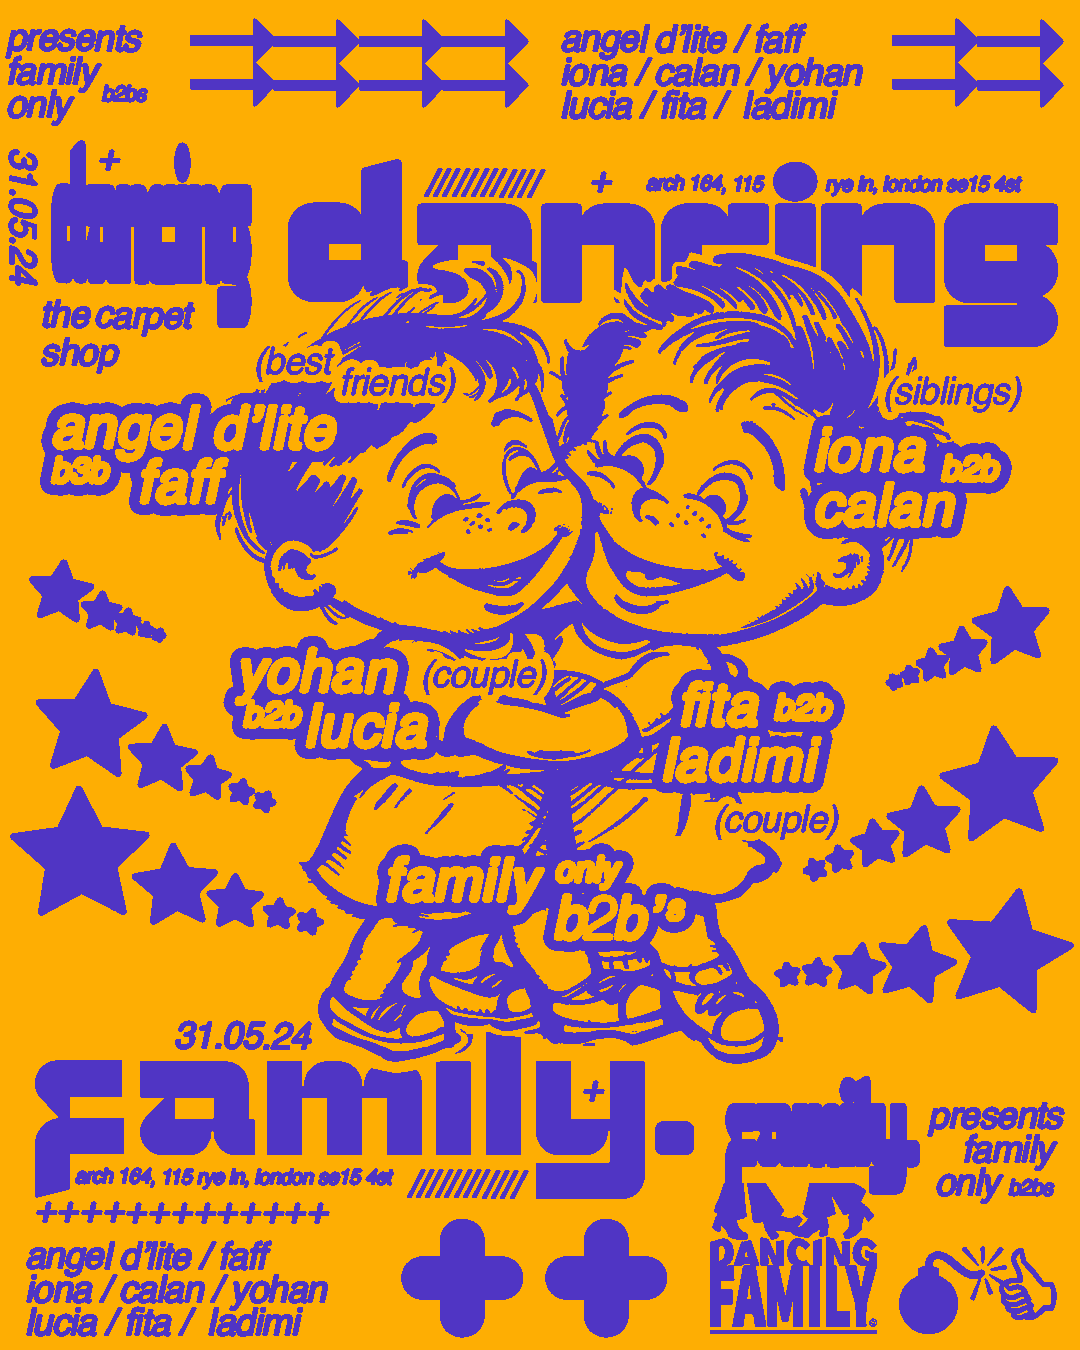 Dancing Family: Angel D'lite b2b FAFF, iona b2b calan, Fita b2b LaDimi, Yohan b2b Lucia - Página frontal